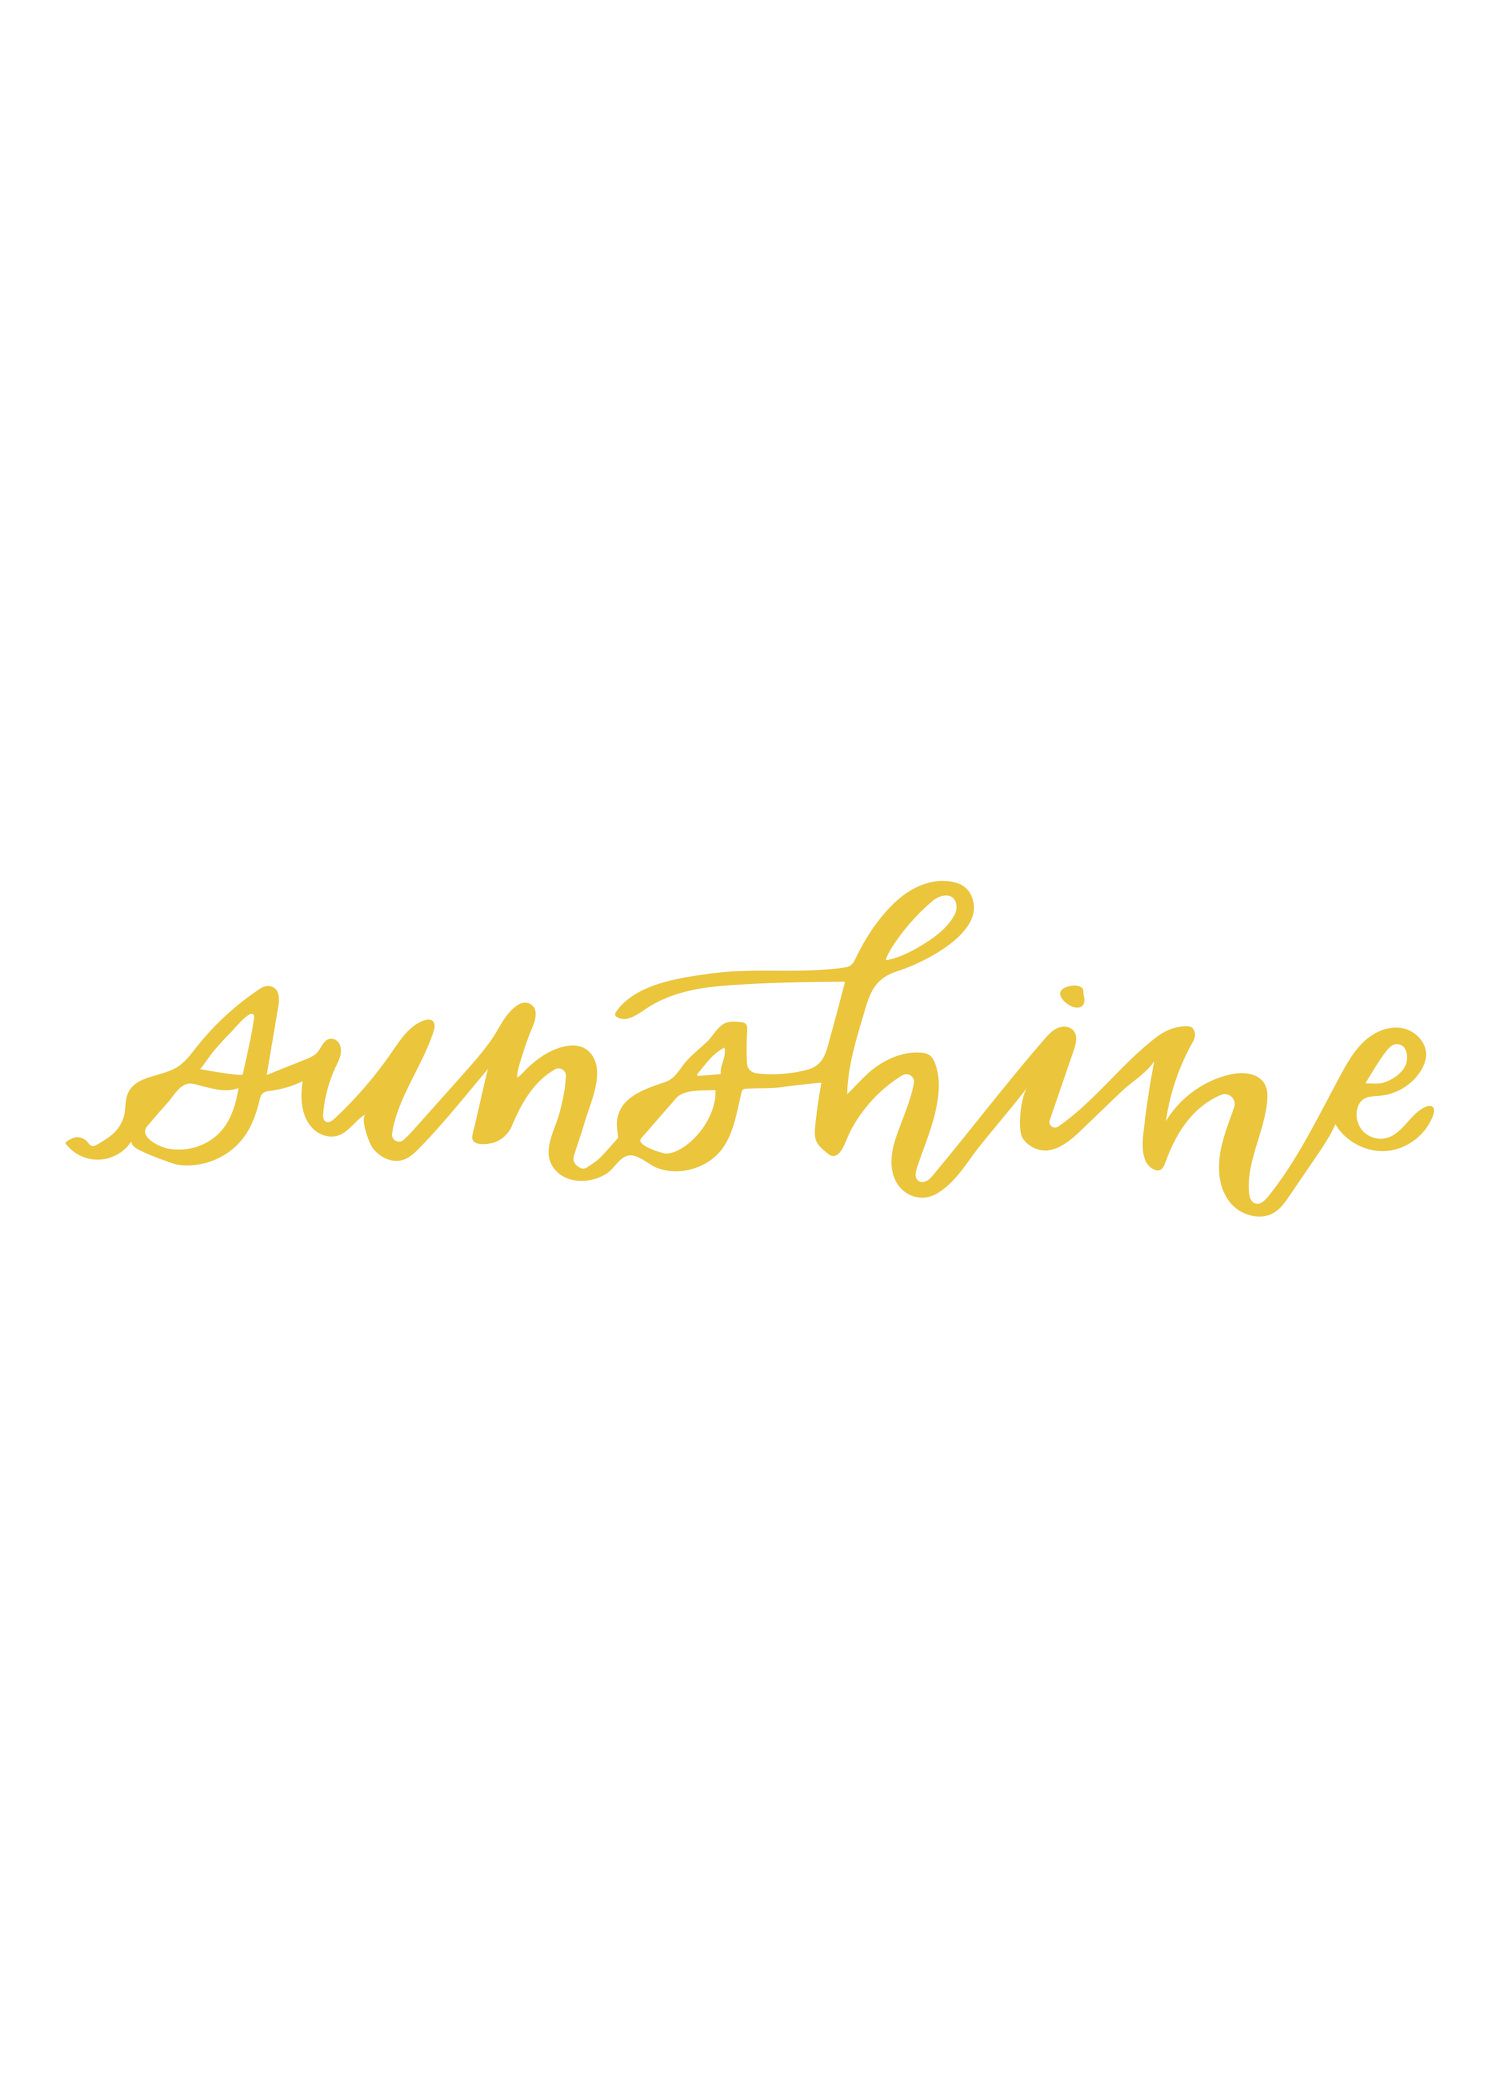 "sunshine" calligraphy